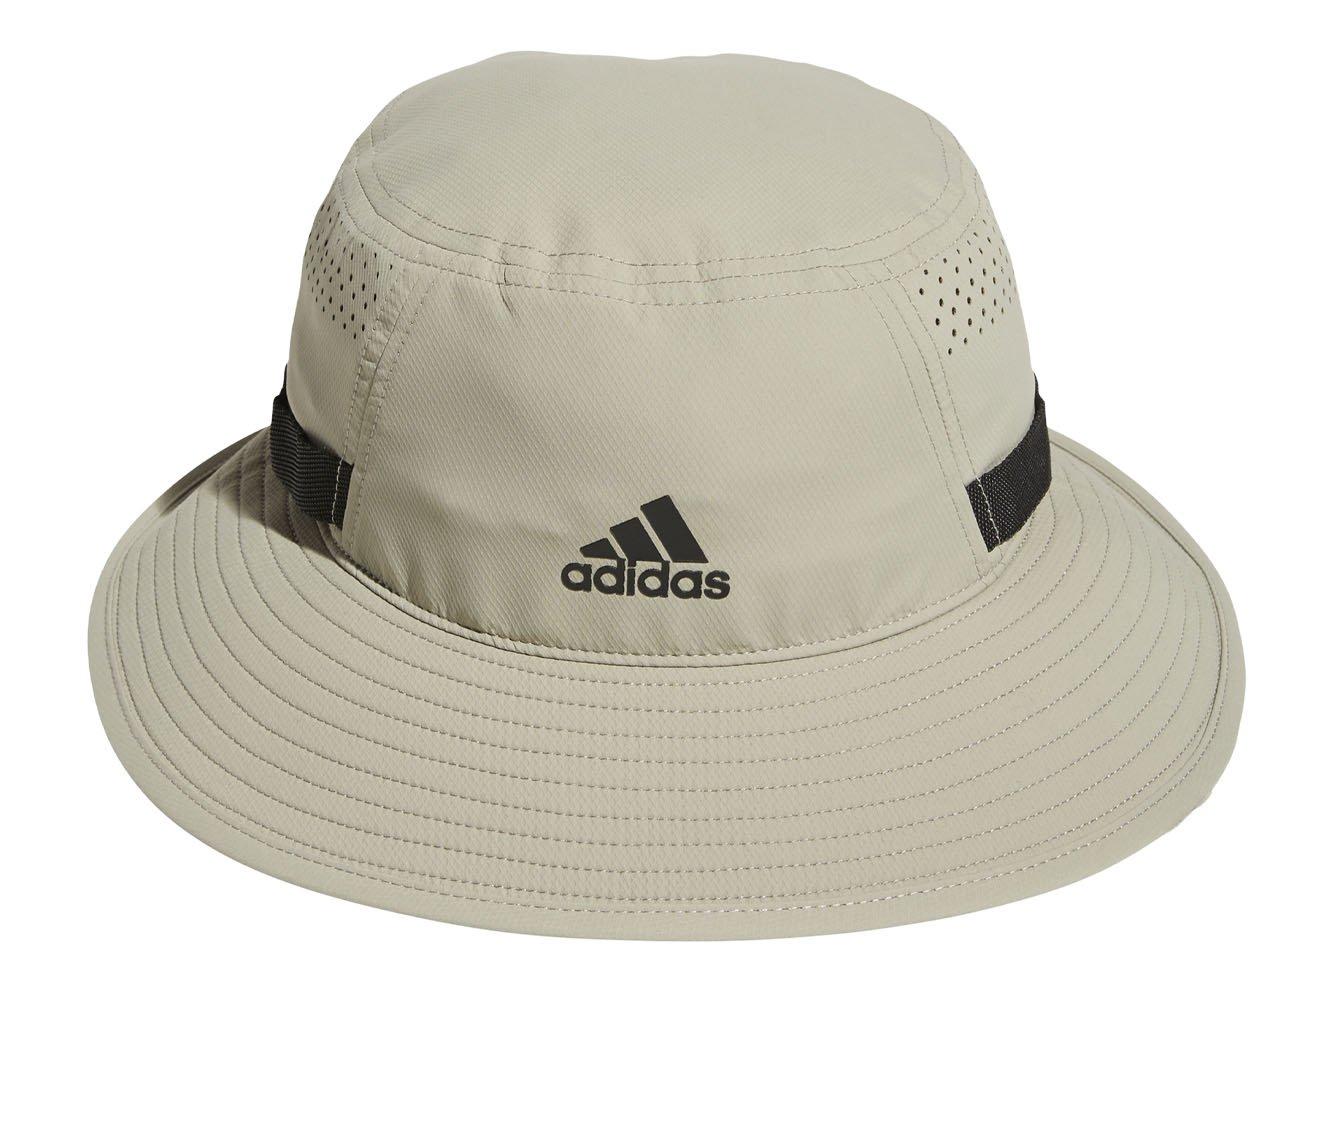 Adidas Men's Victory IV Bucket Hat